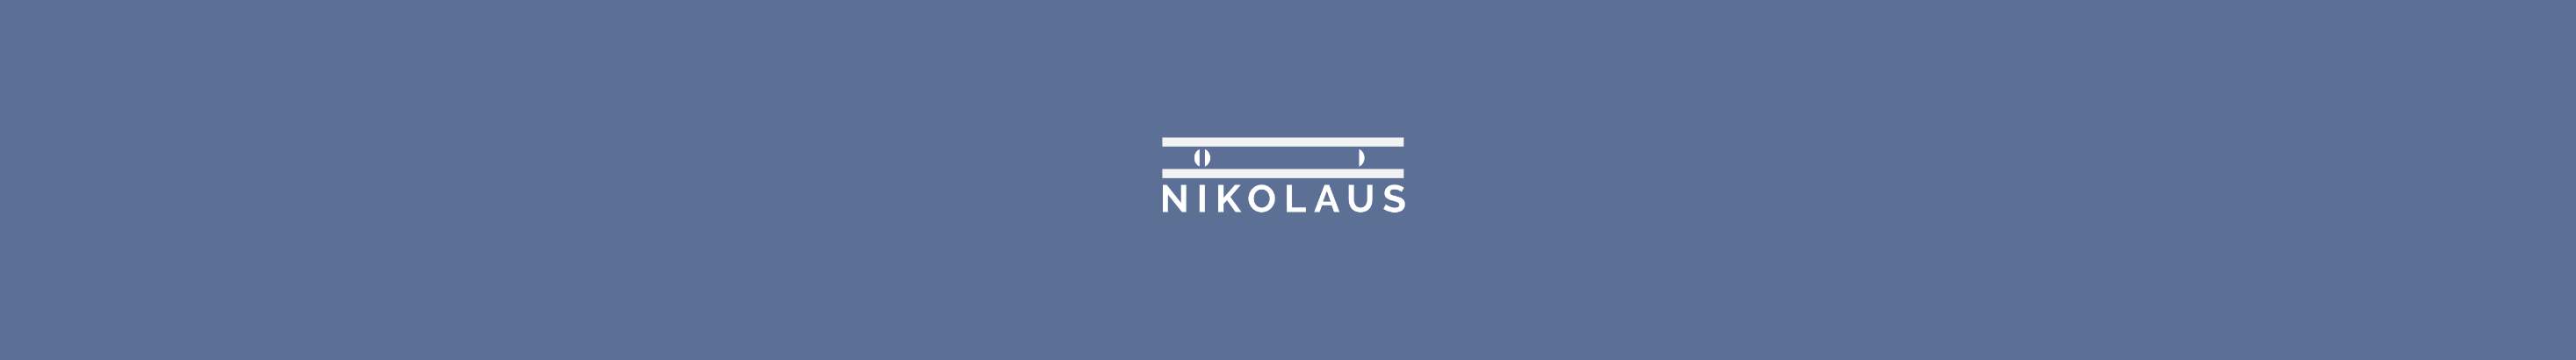 Nikolaus Morris's profile banner